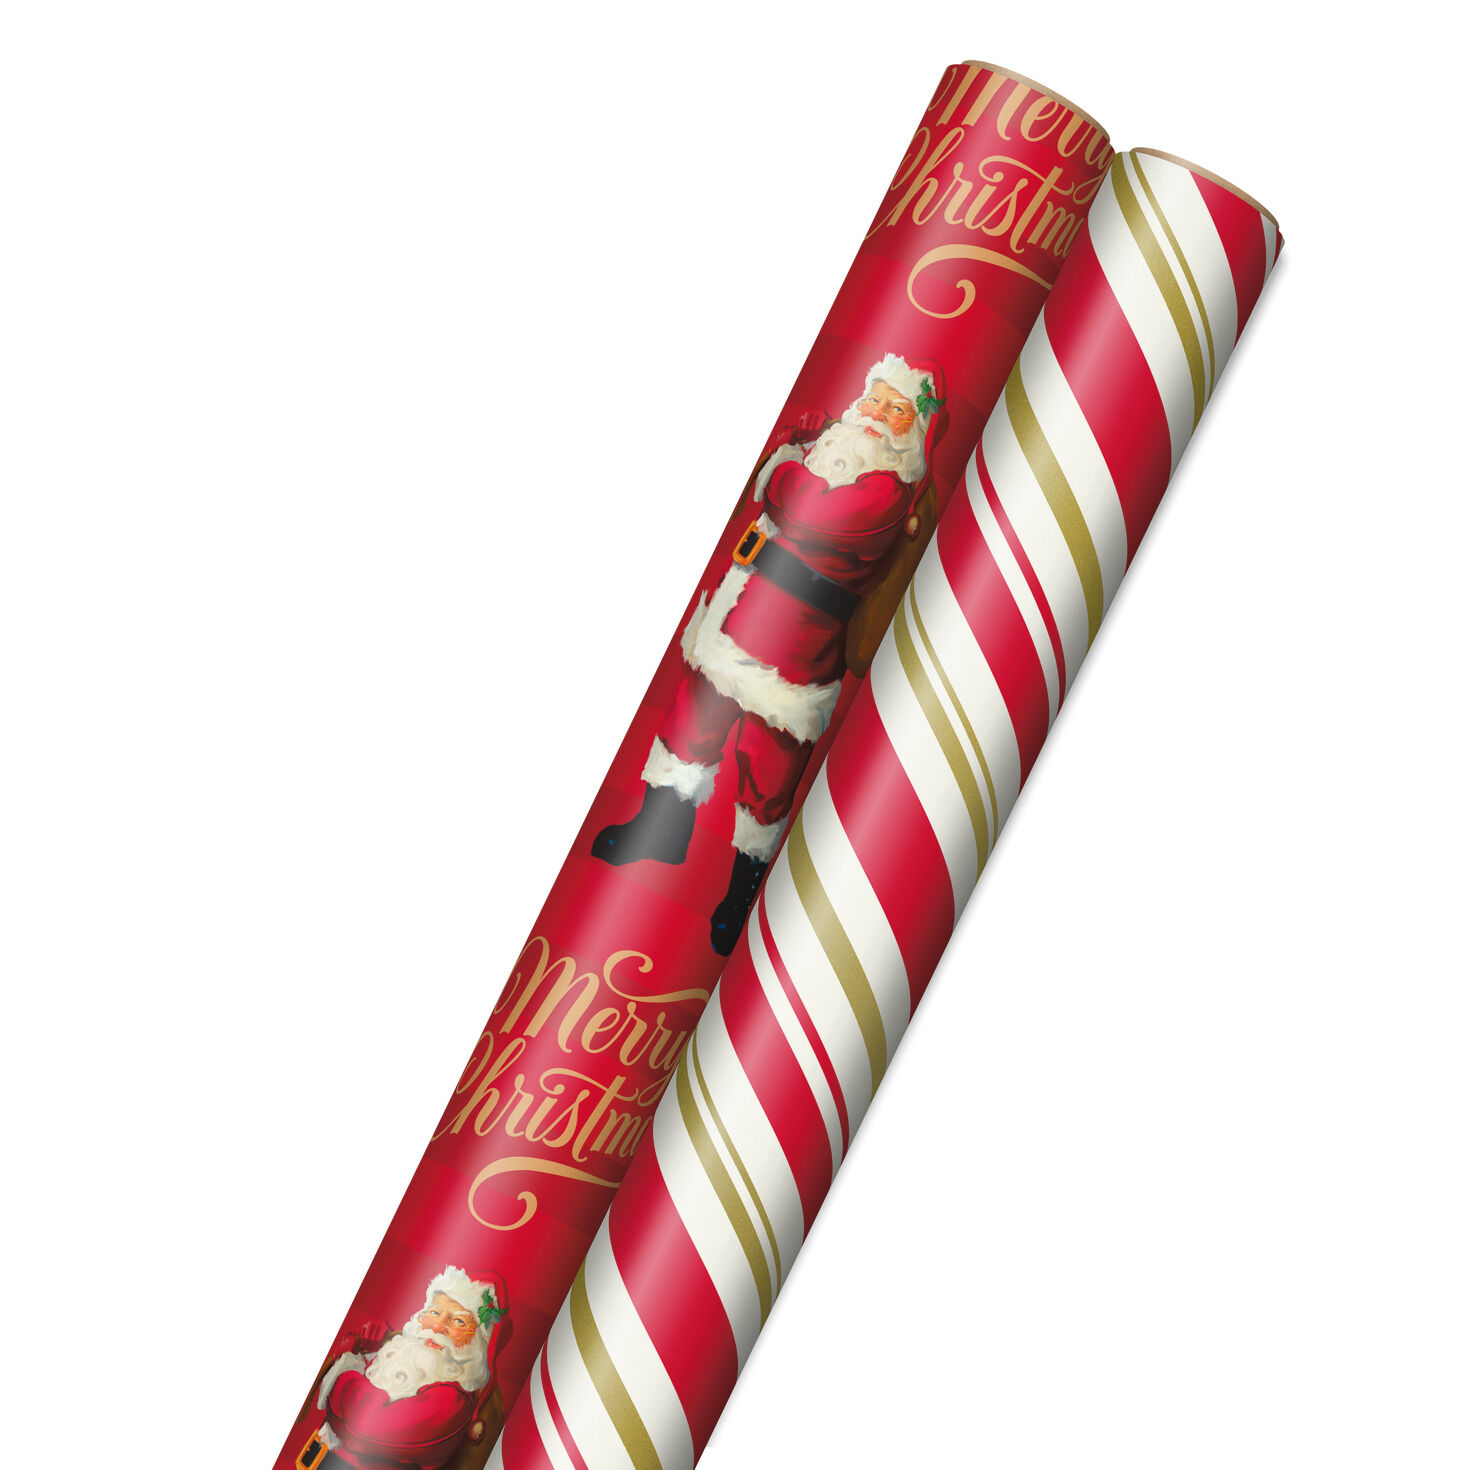 Hallmark Wrapping Paper Christmas Tis The Season Black 35 sq ft